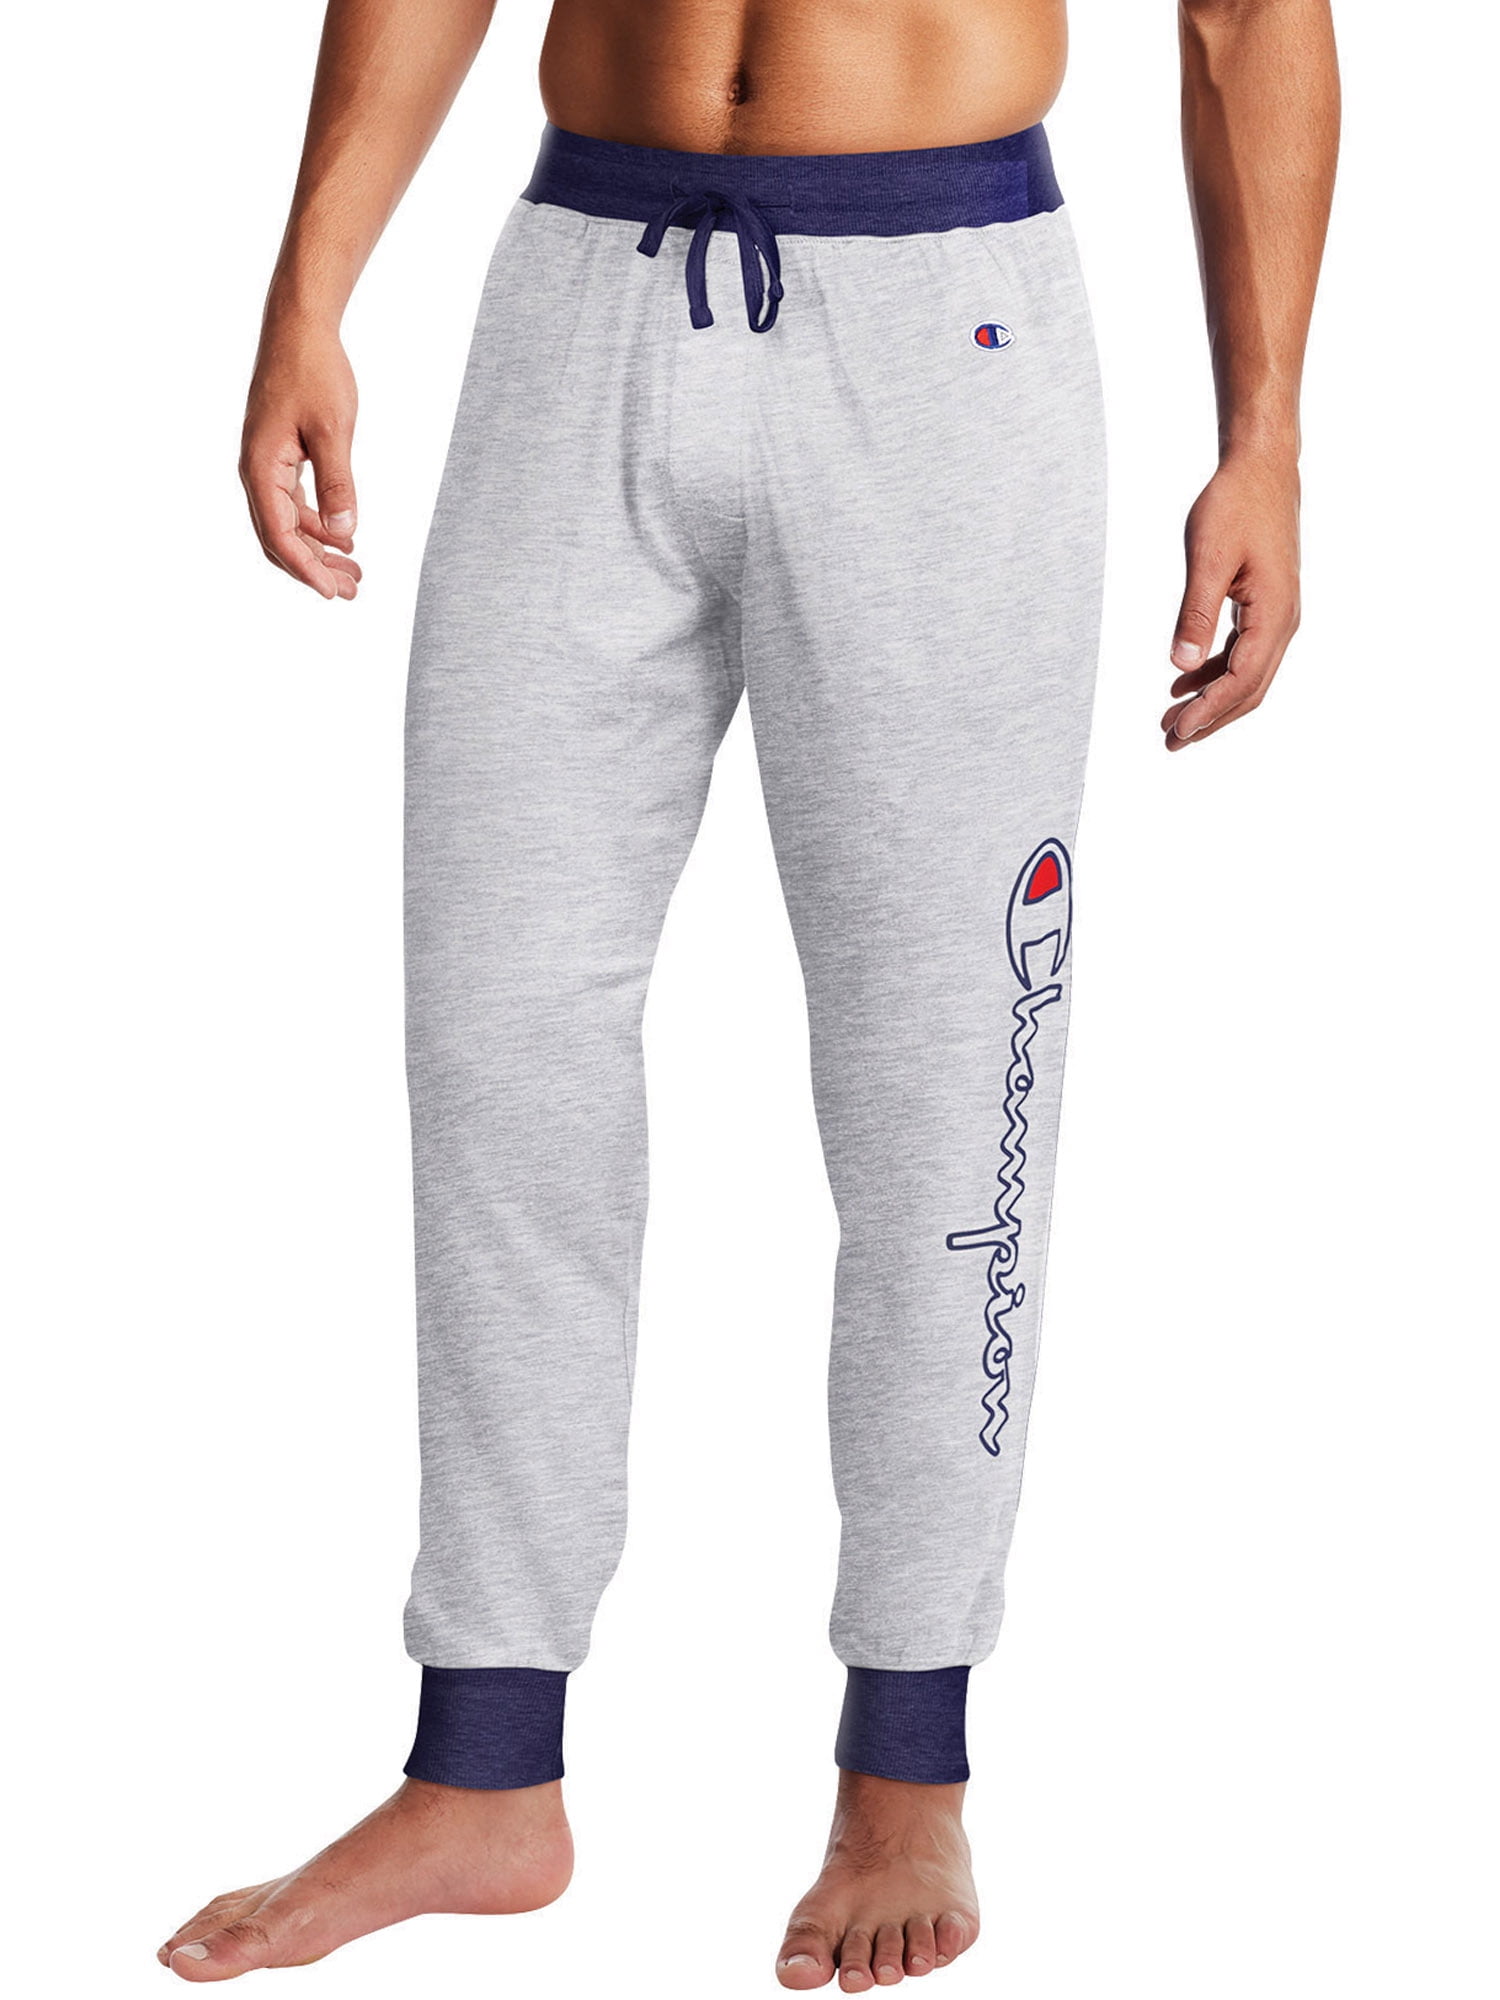 Mens Star Wars Pyjamas Lounge Pants Character Cuffed Leg Disney Cotton Pyjama 